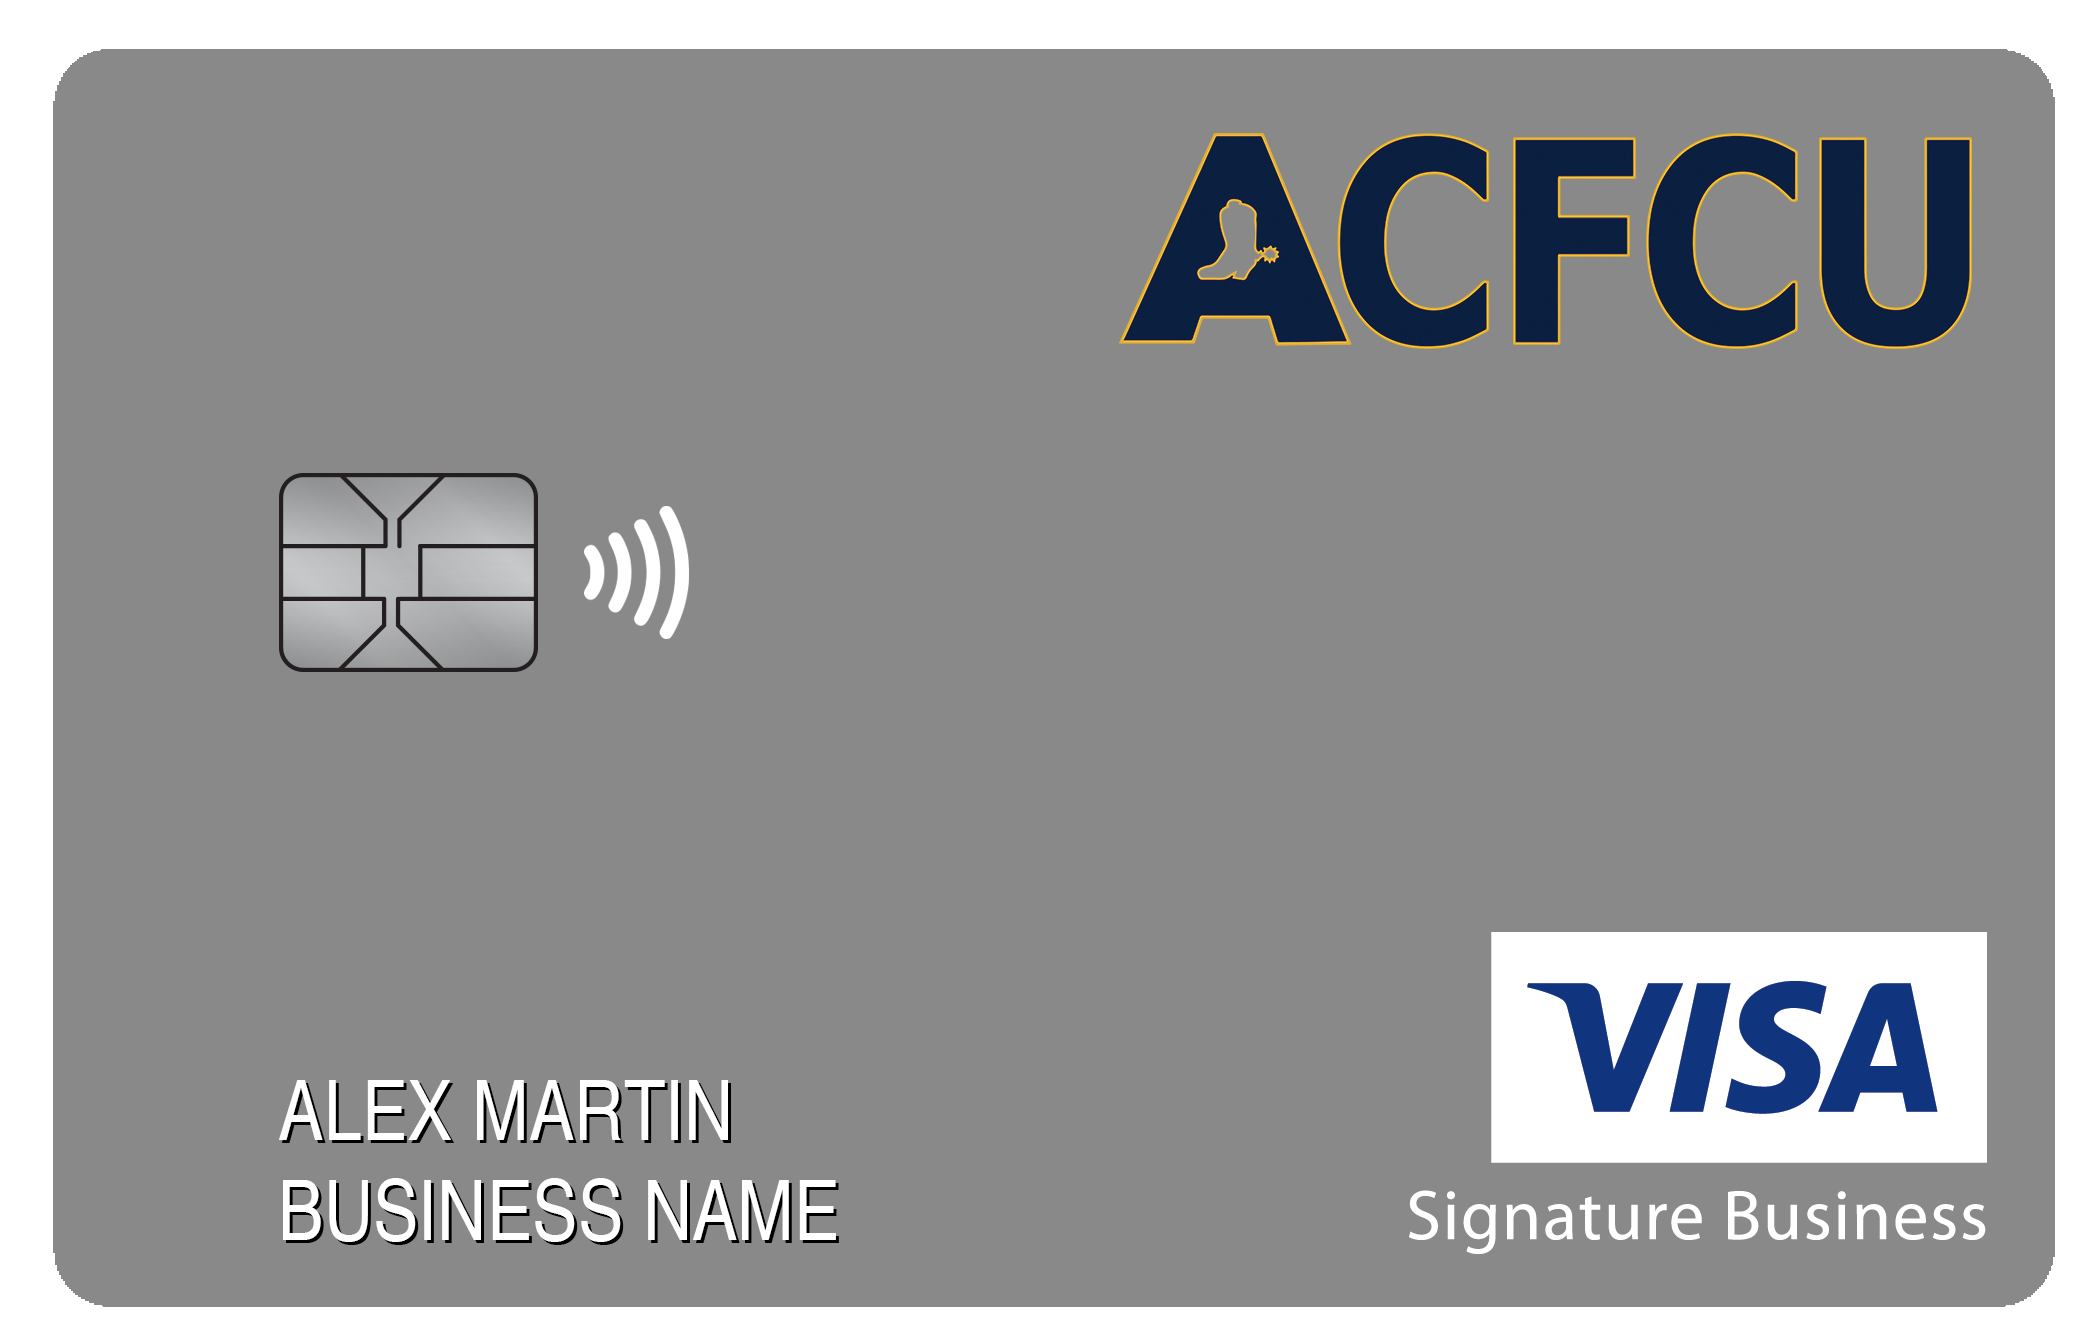 ACFCU Smart Business Rewards Card